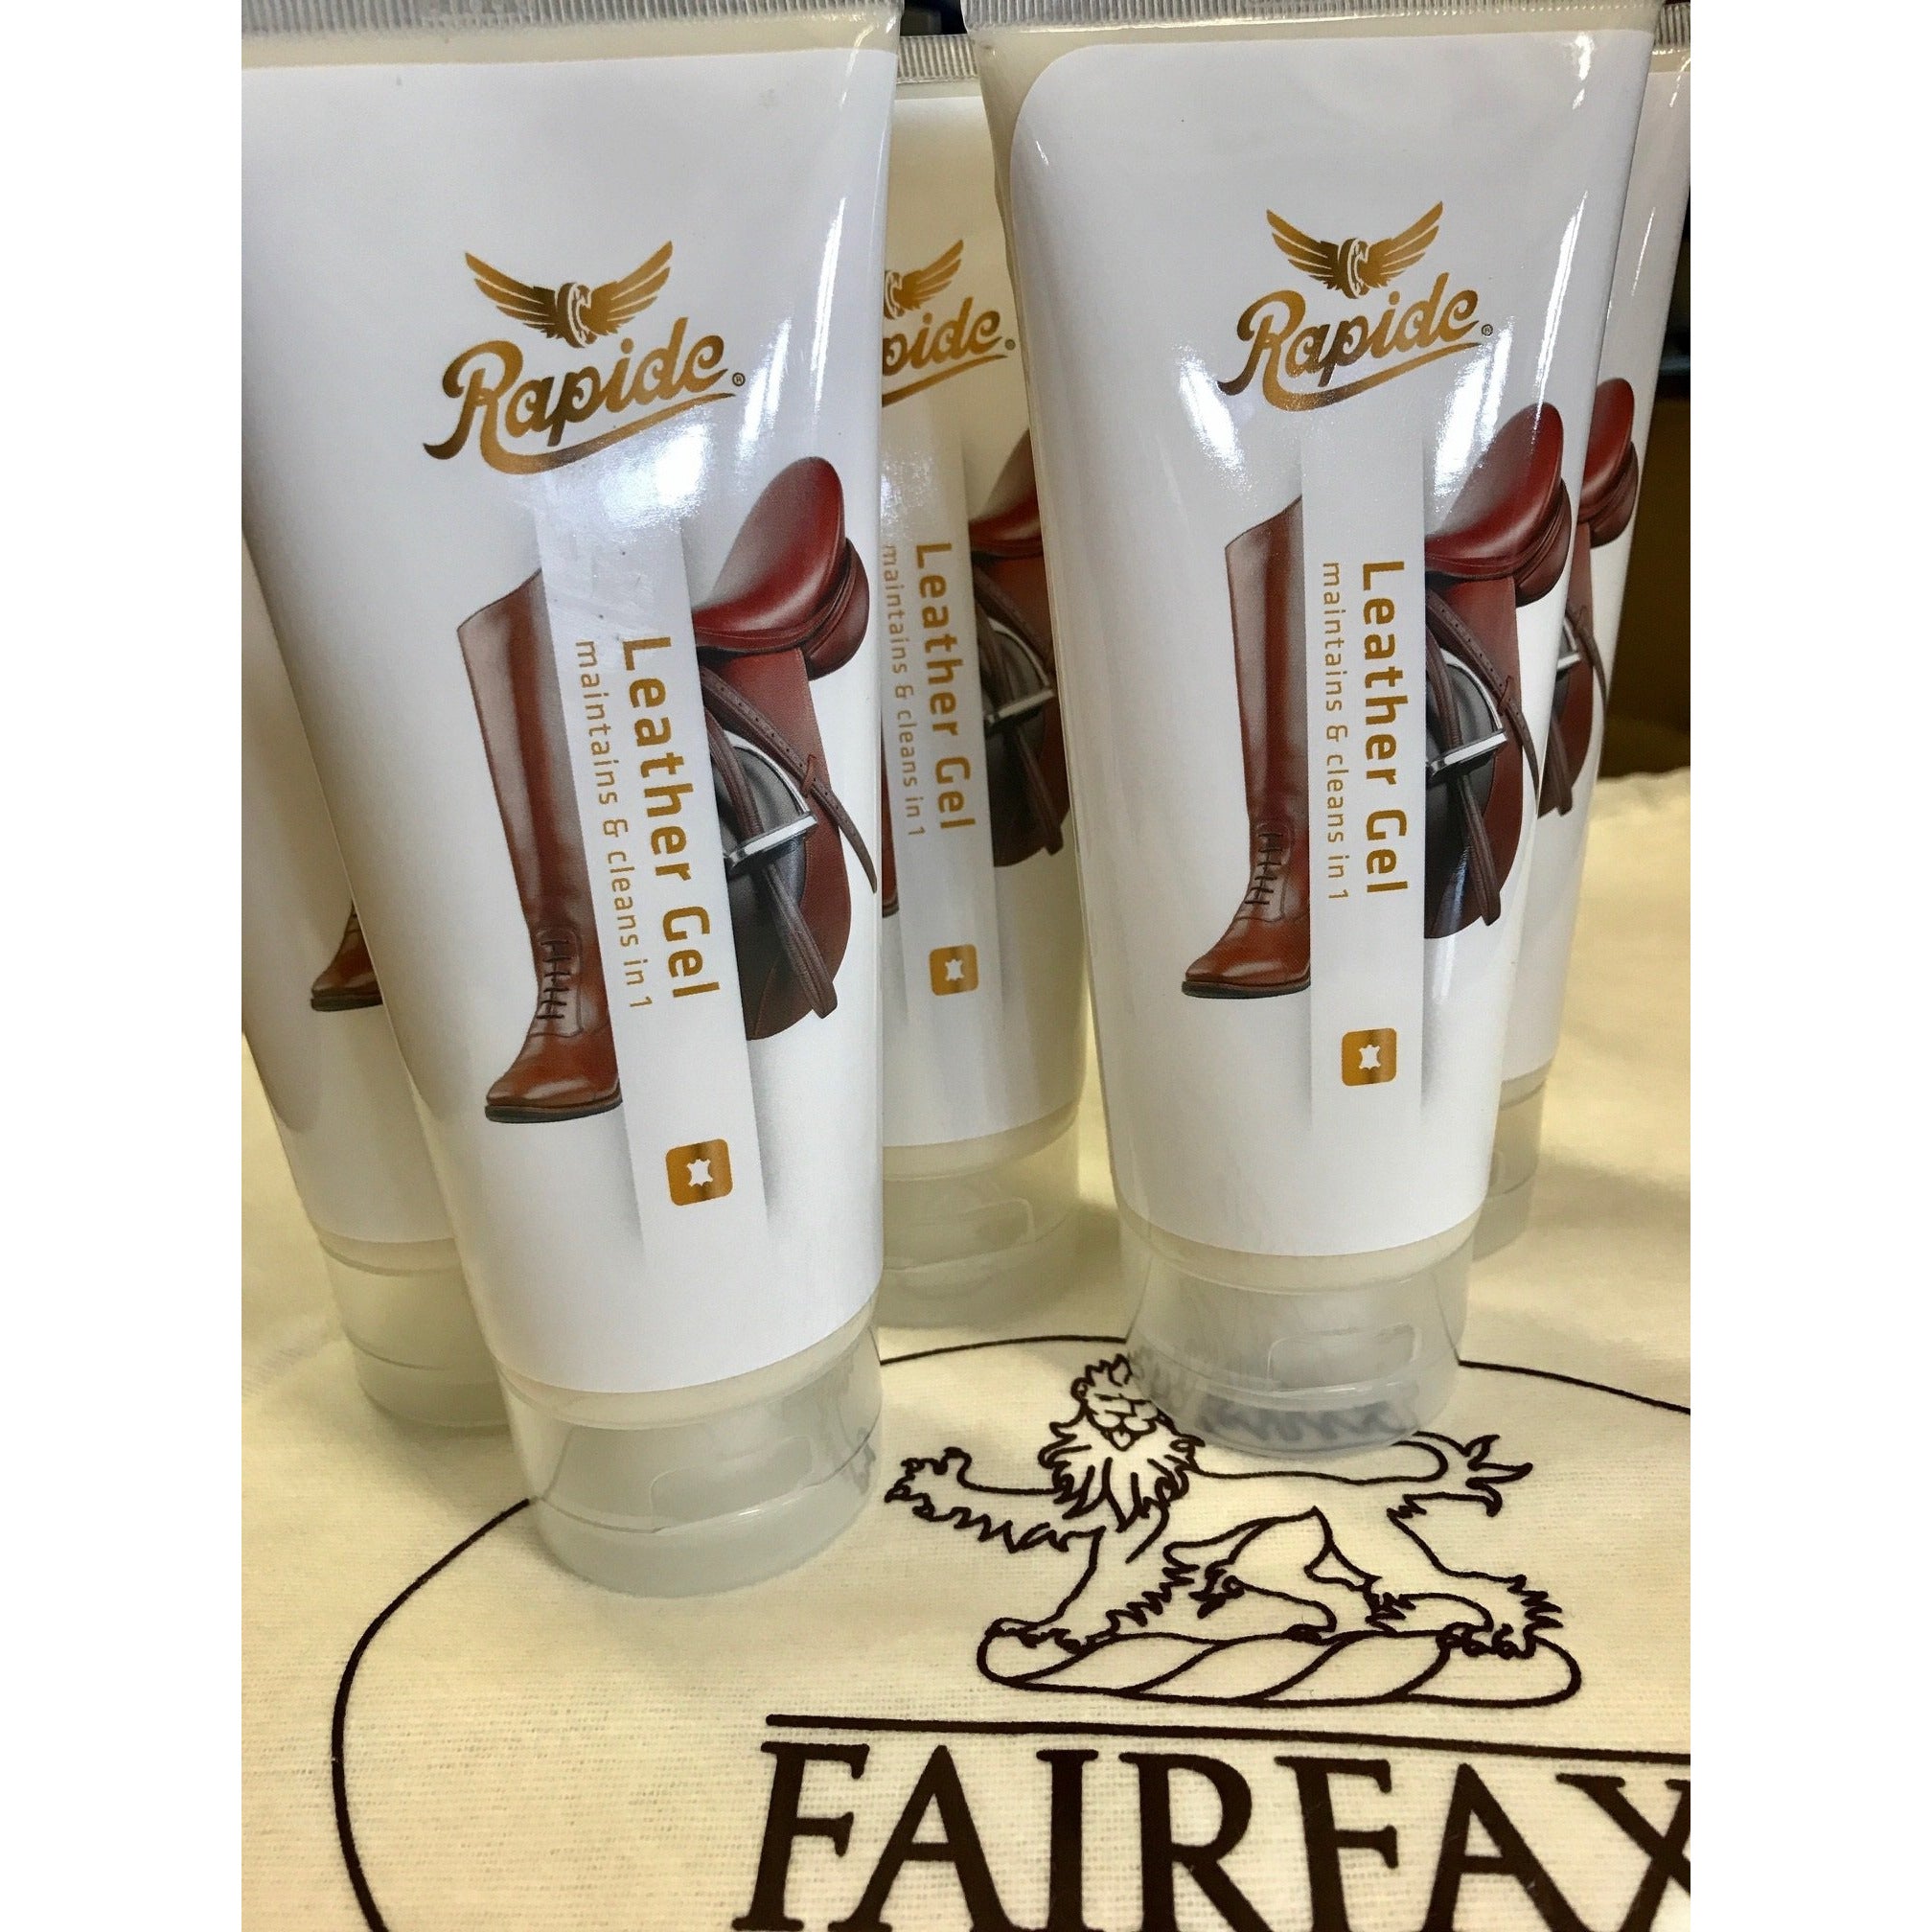 Fairfax Rapide Leather Gel (set of 3)